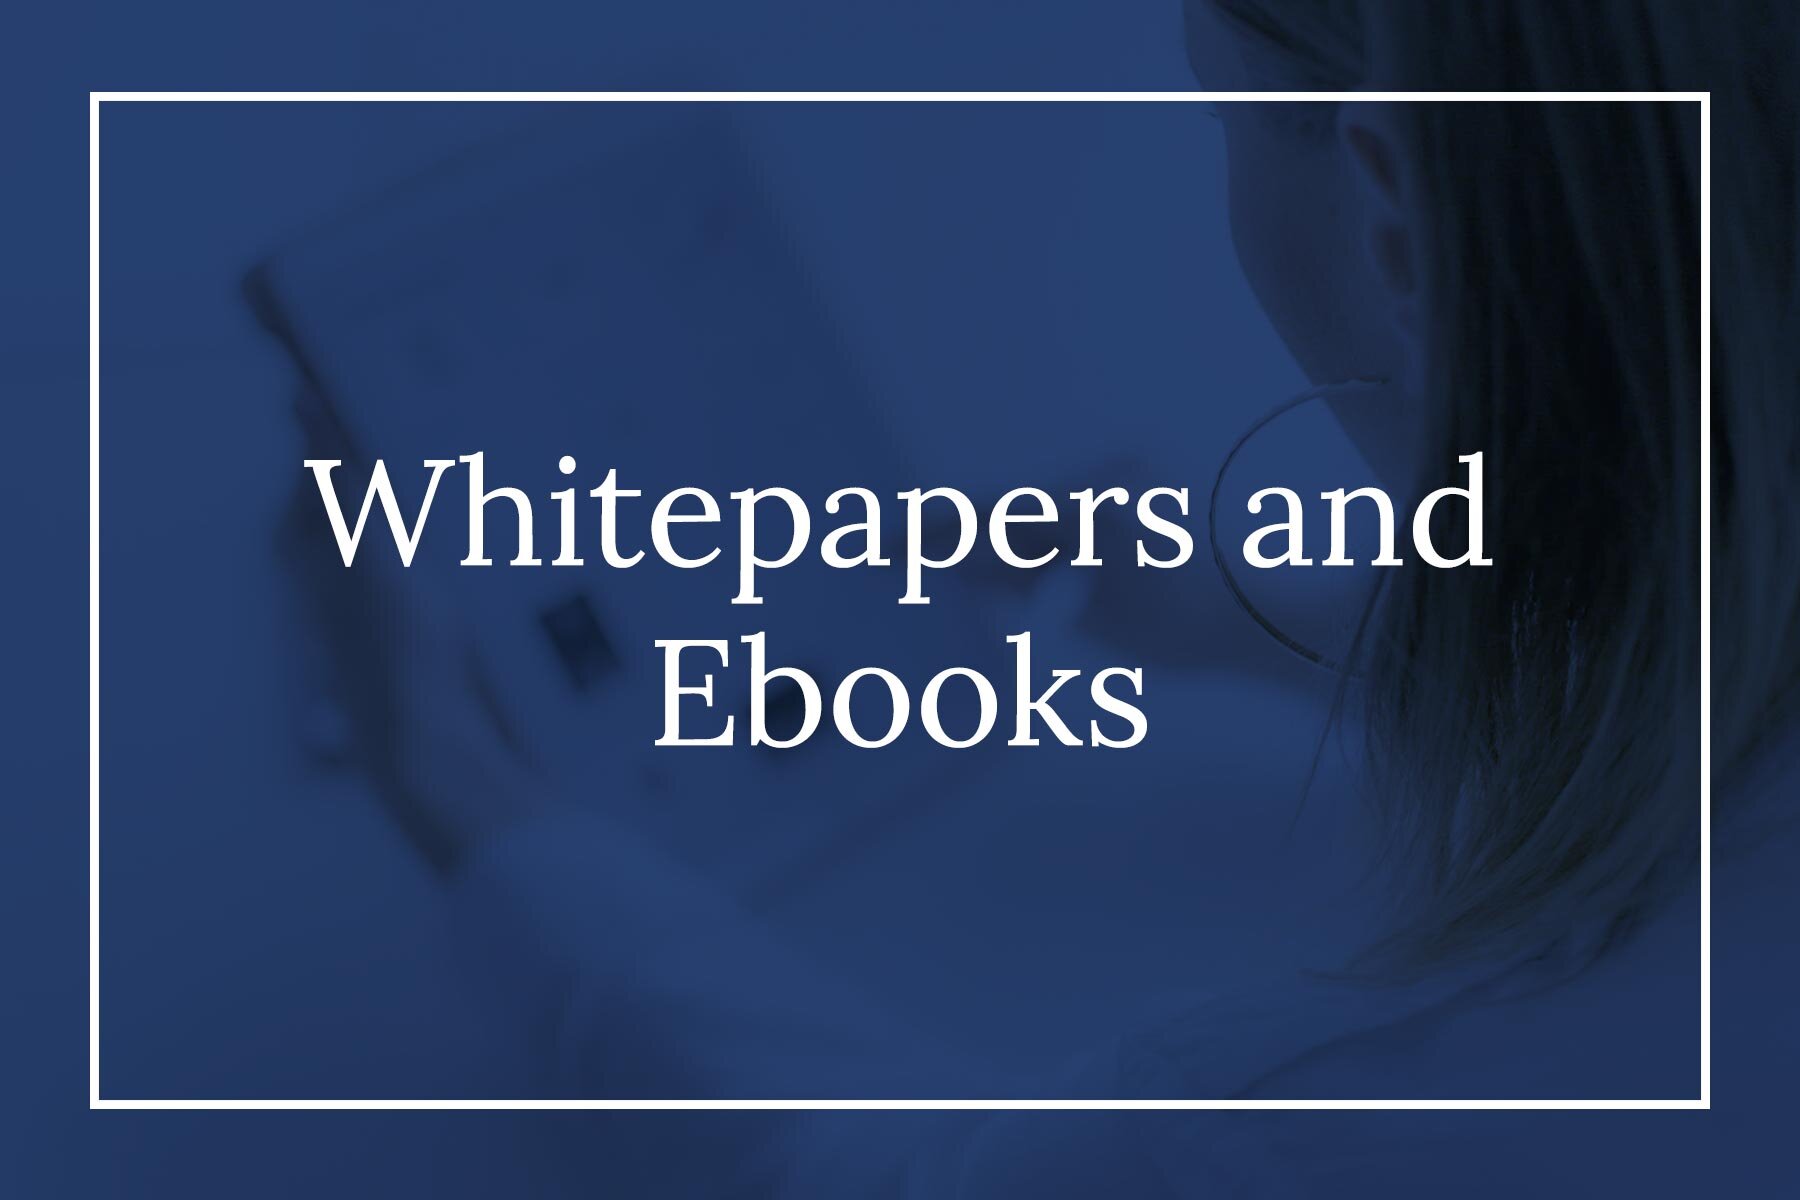 whitepapers-and-ebooks.jpg